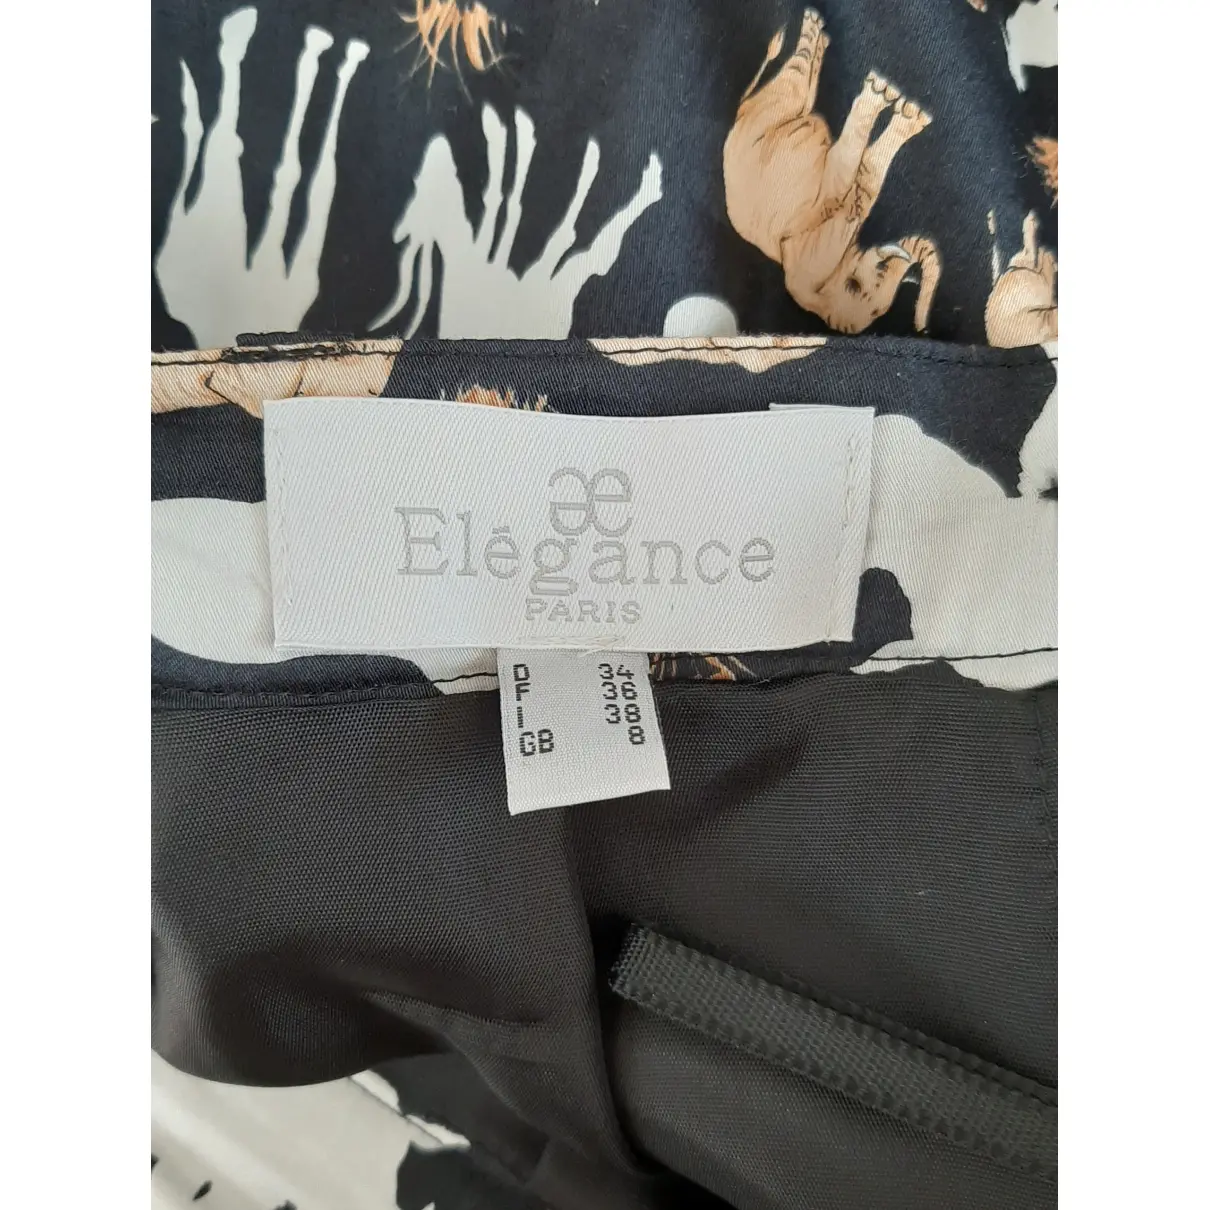 Buy Elegance Paris Mini skirt online